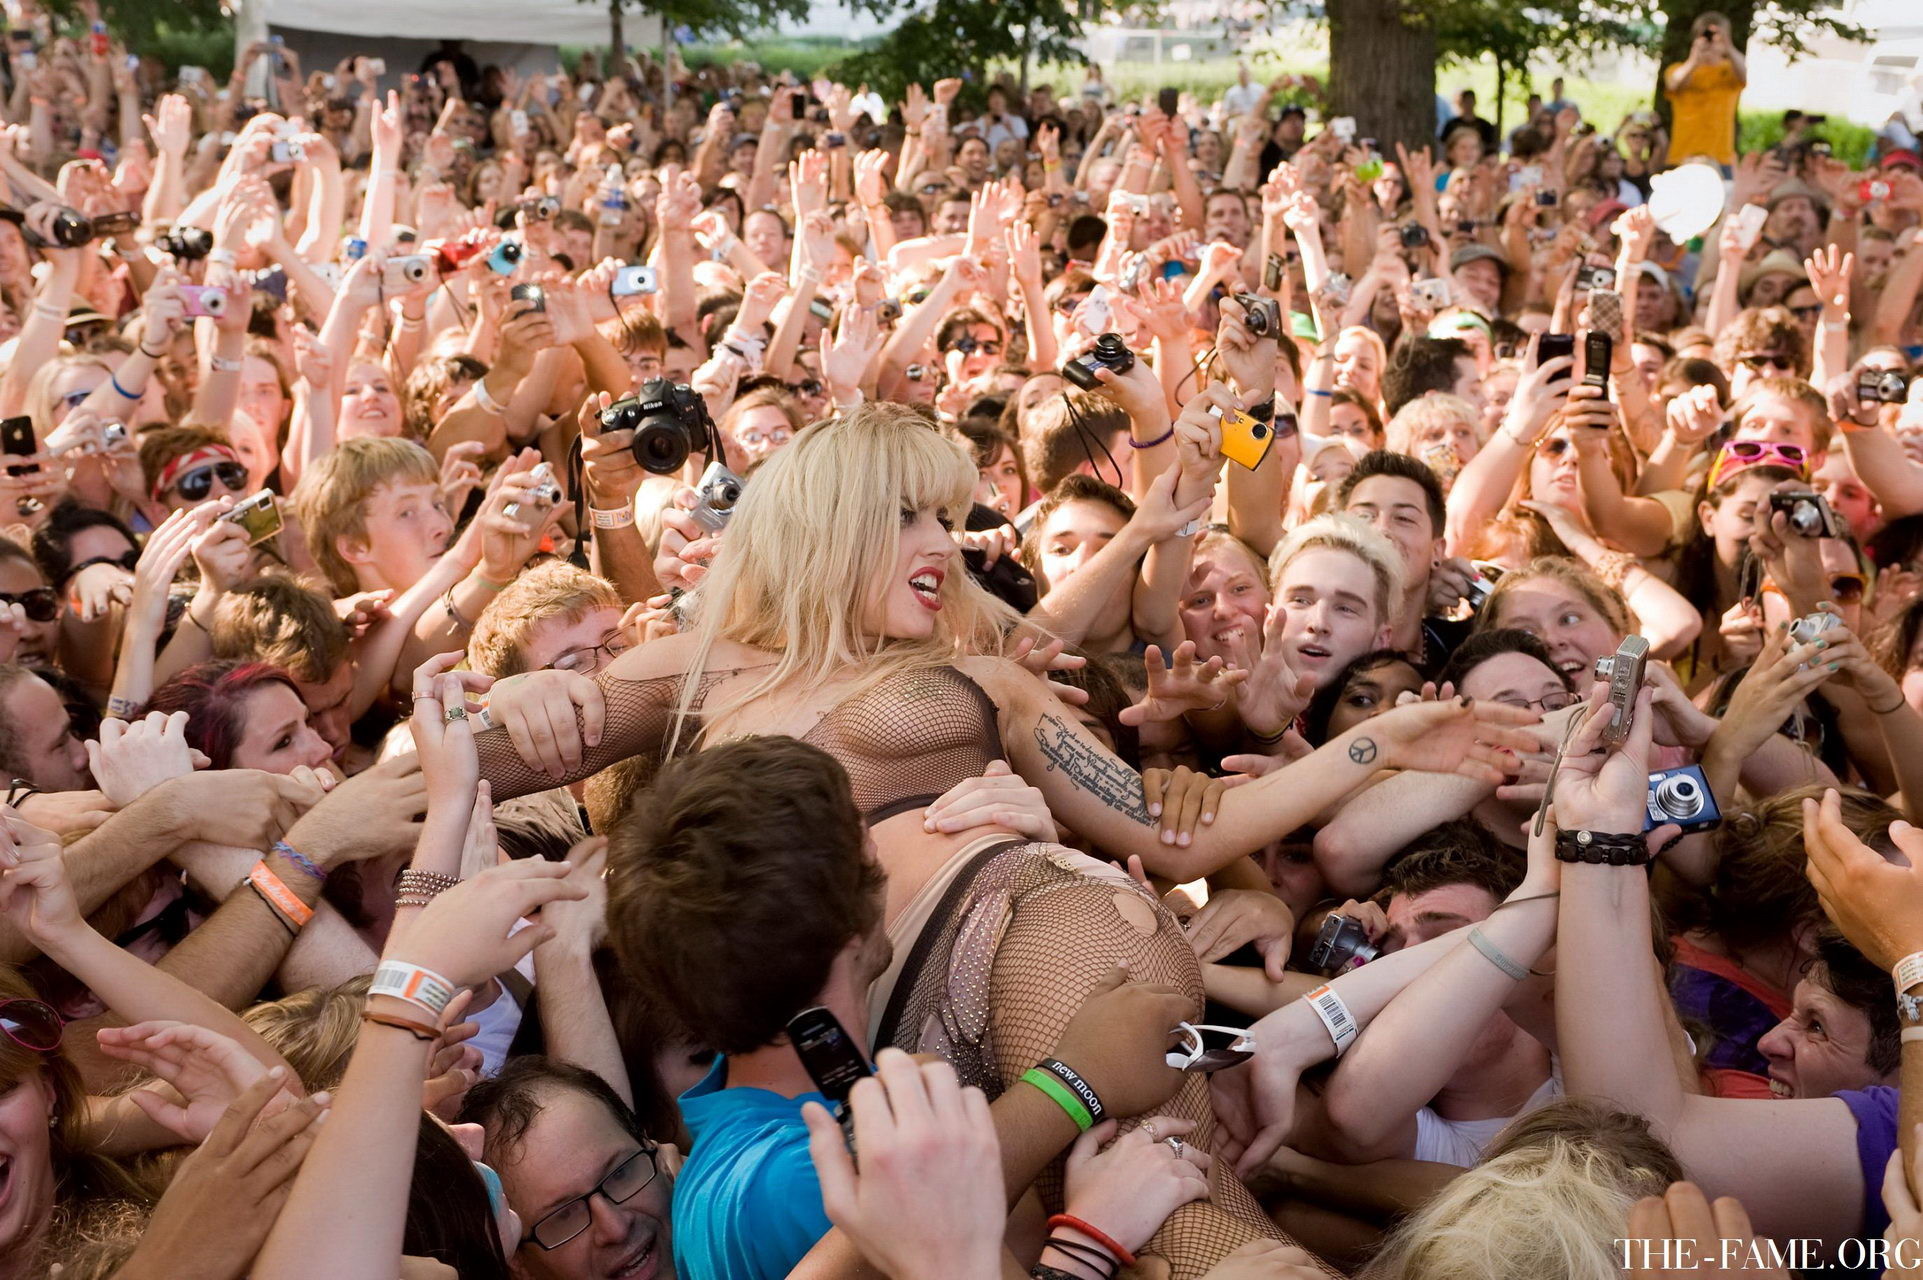 Lady Gaga crowd surfing at Lollapalooza wearing just fishnet  nip stickers #75337826